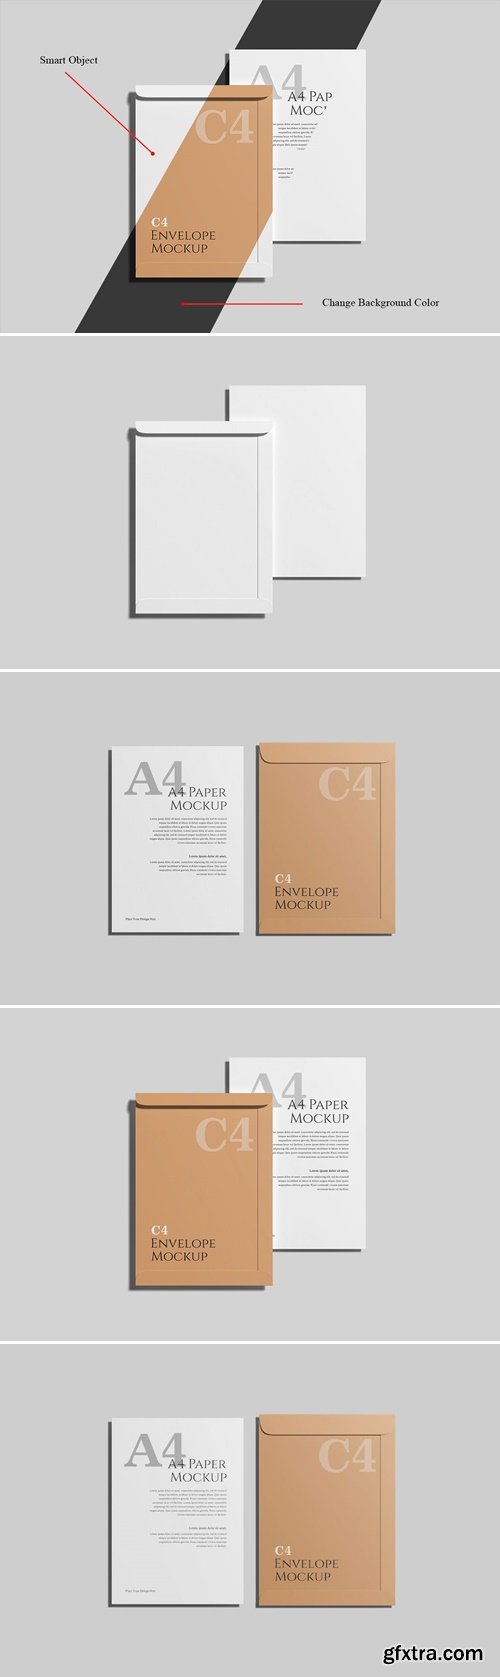 A4 Paper & C4 Envelope Mockup SZHLZ37